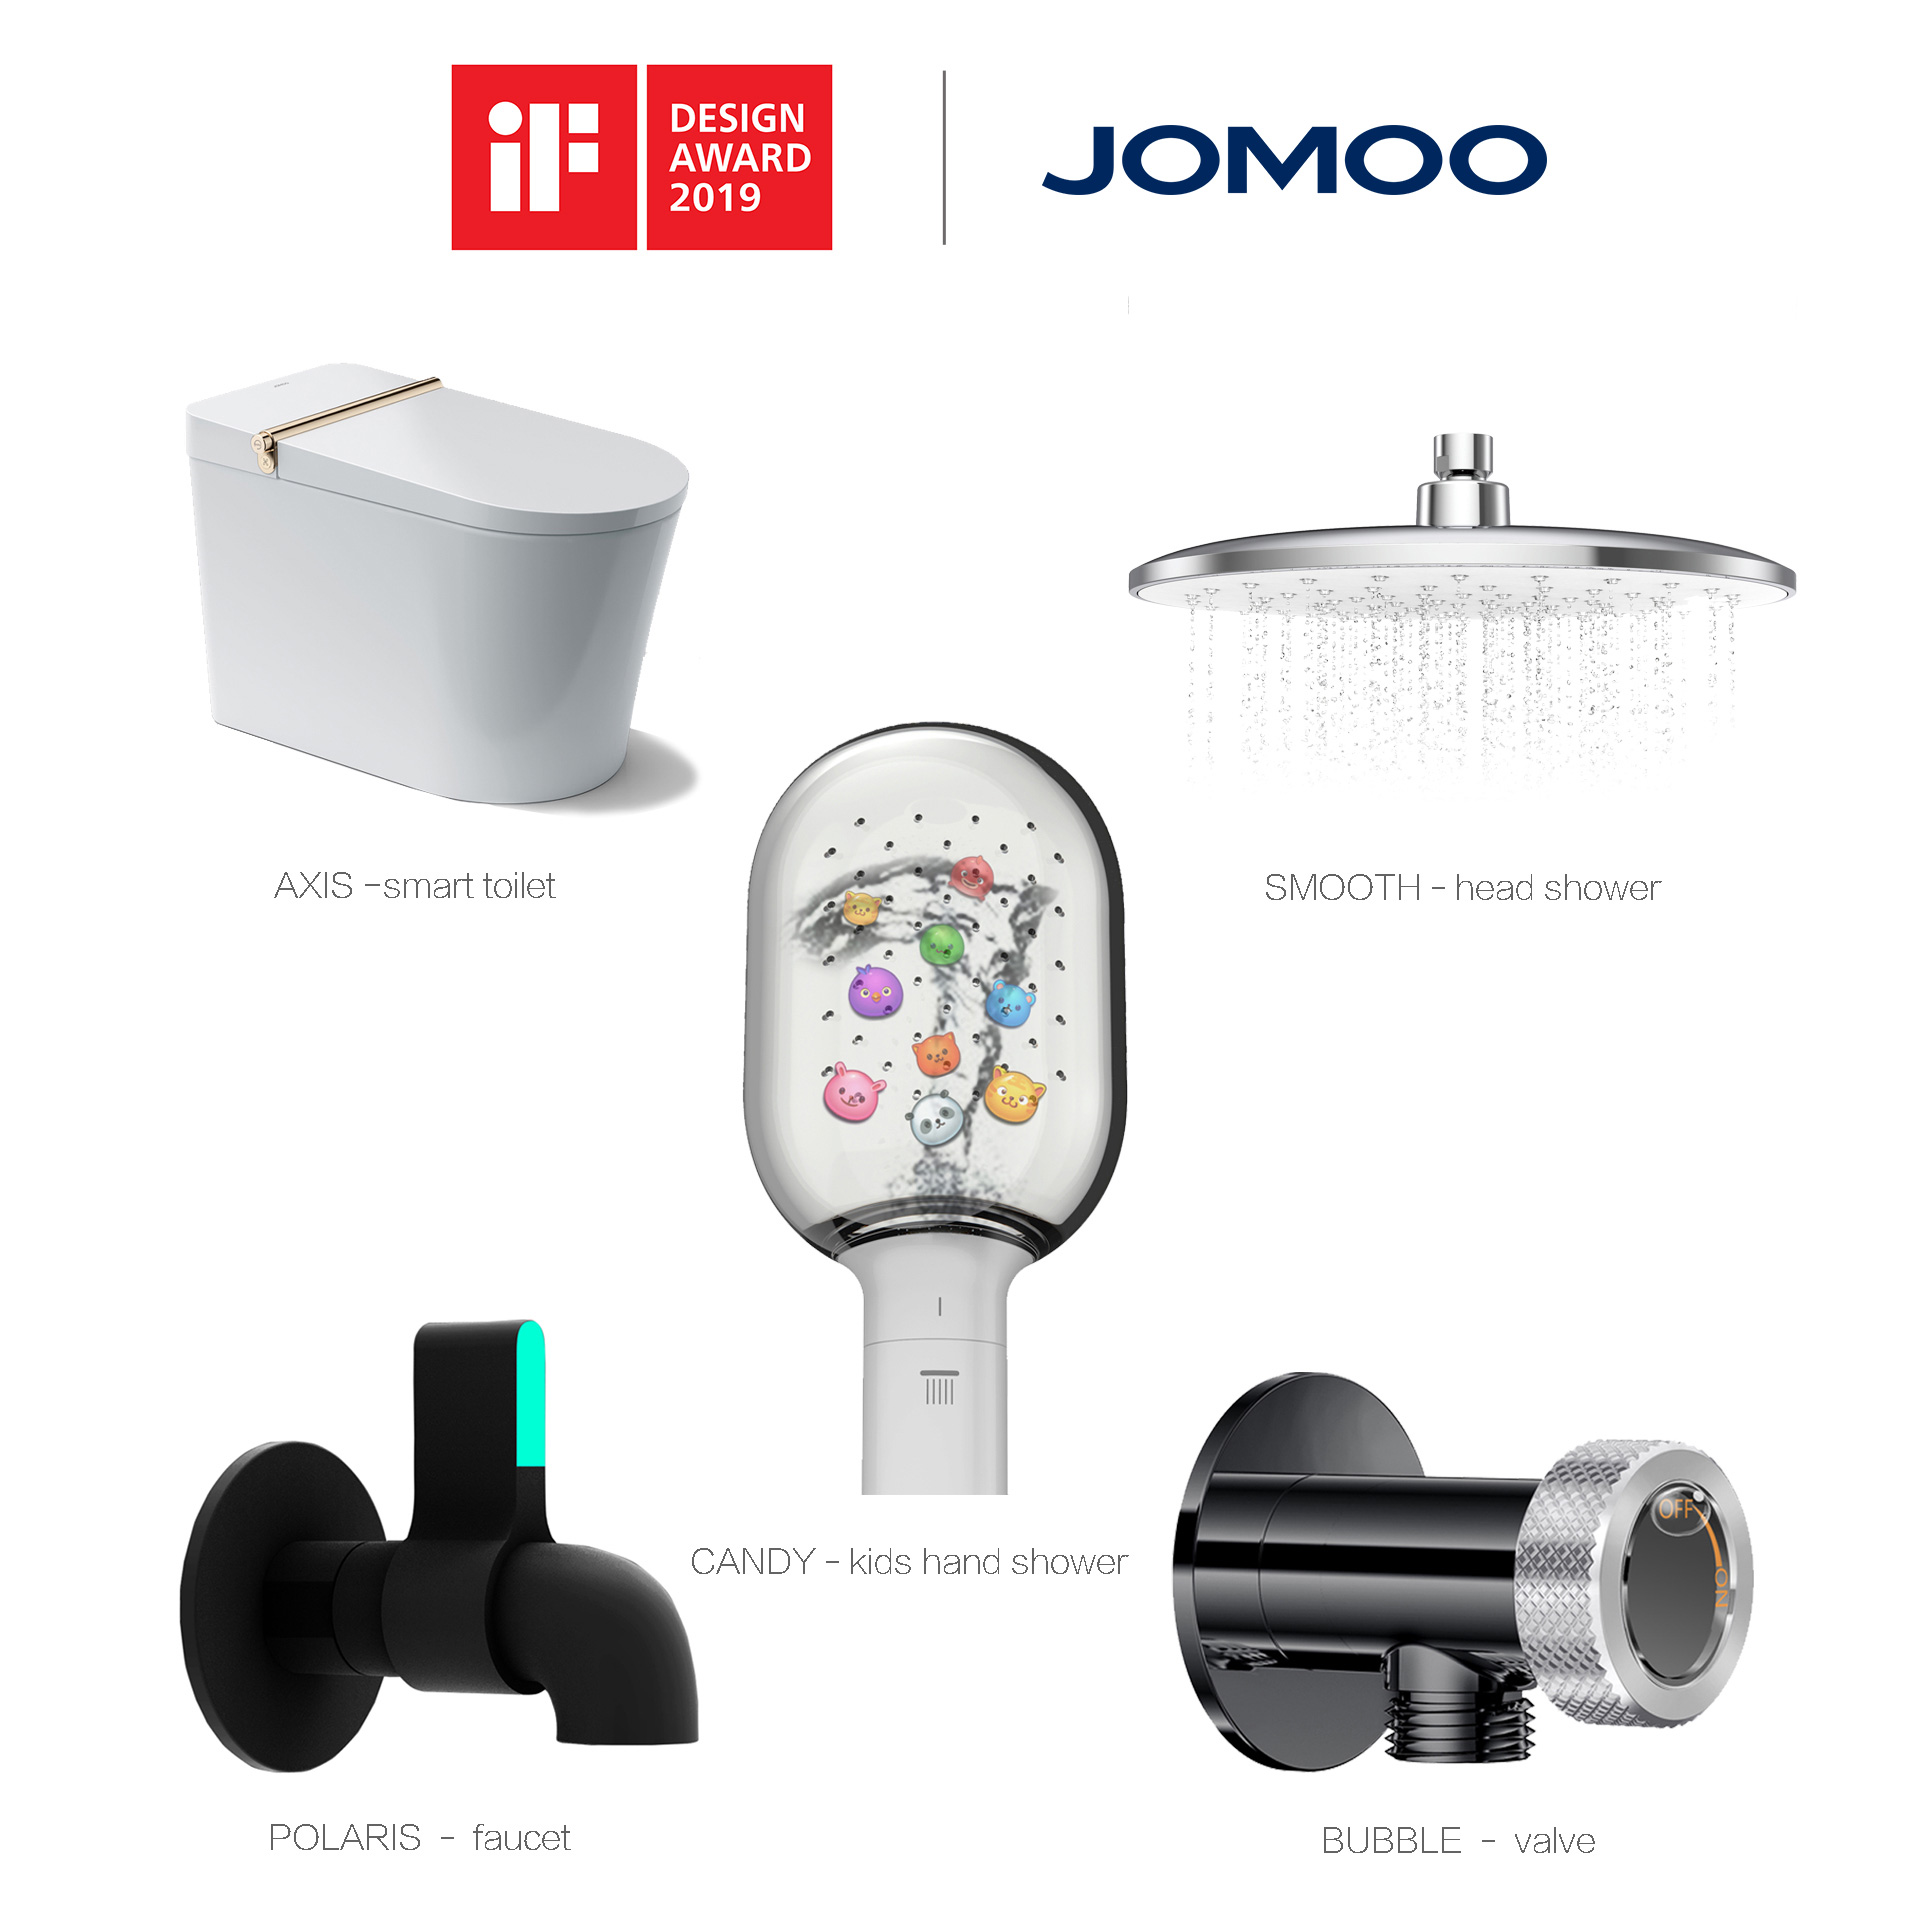 JOMOO winners at iF Design Award 2019.jpg